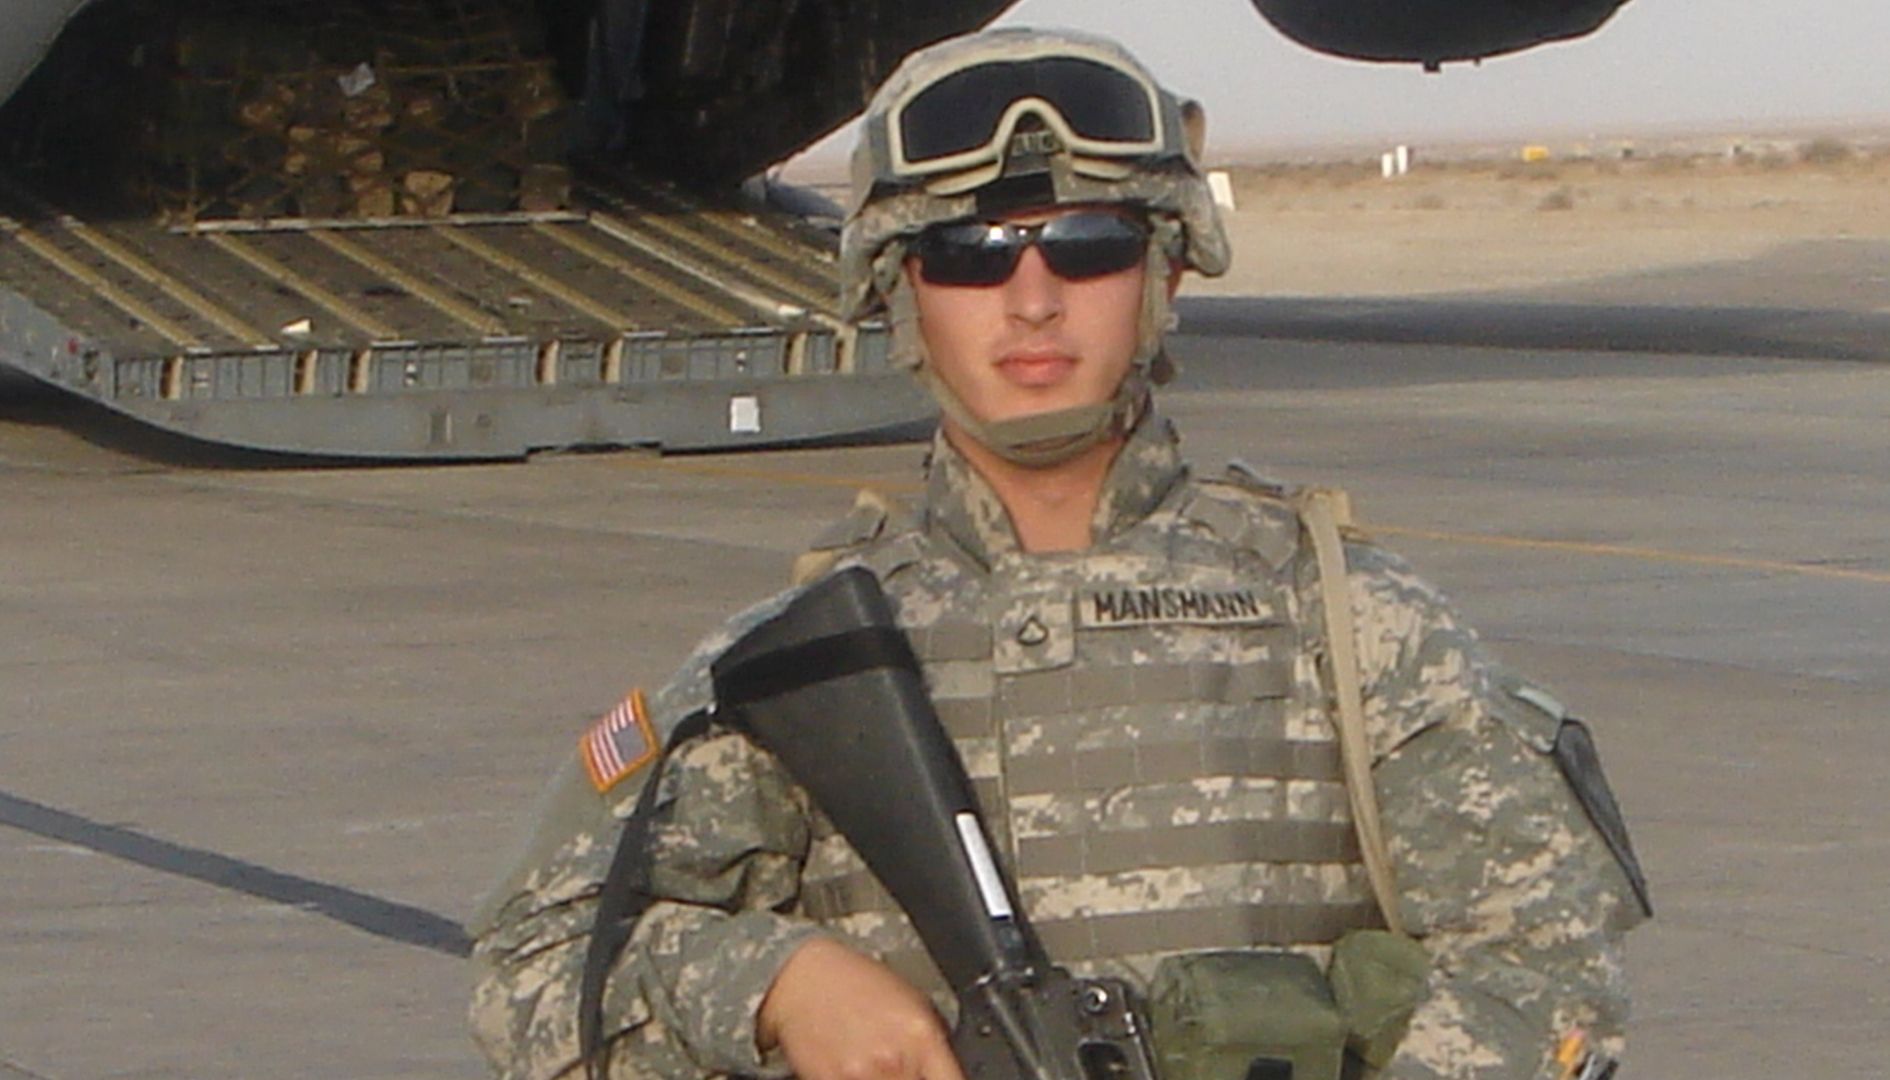 Michael Mansmann in uniform